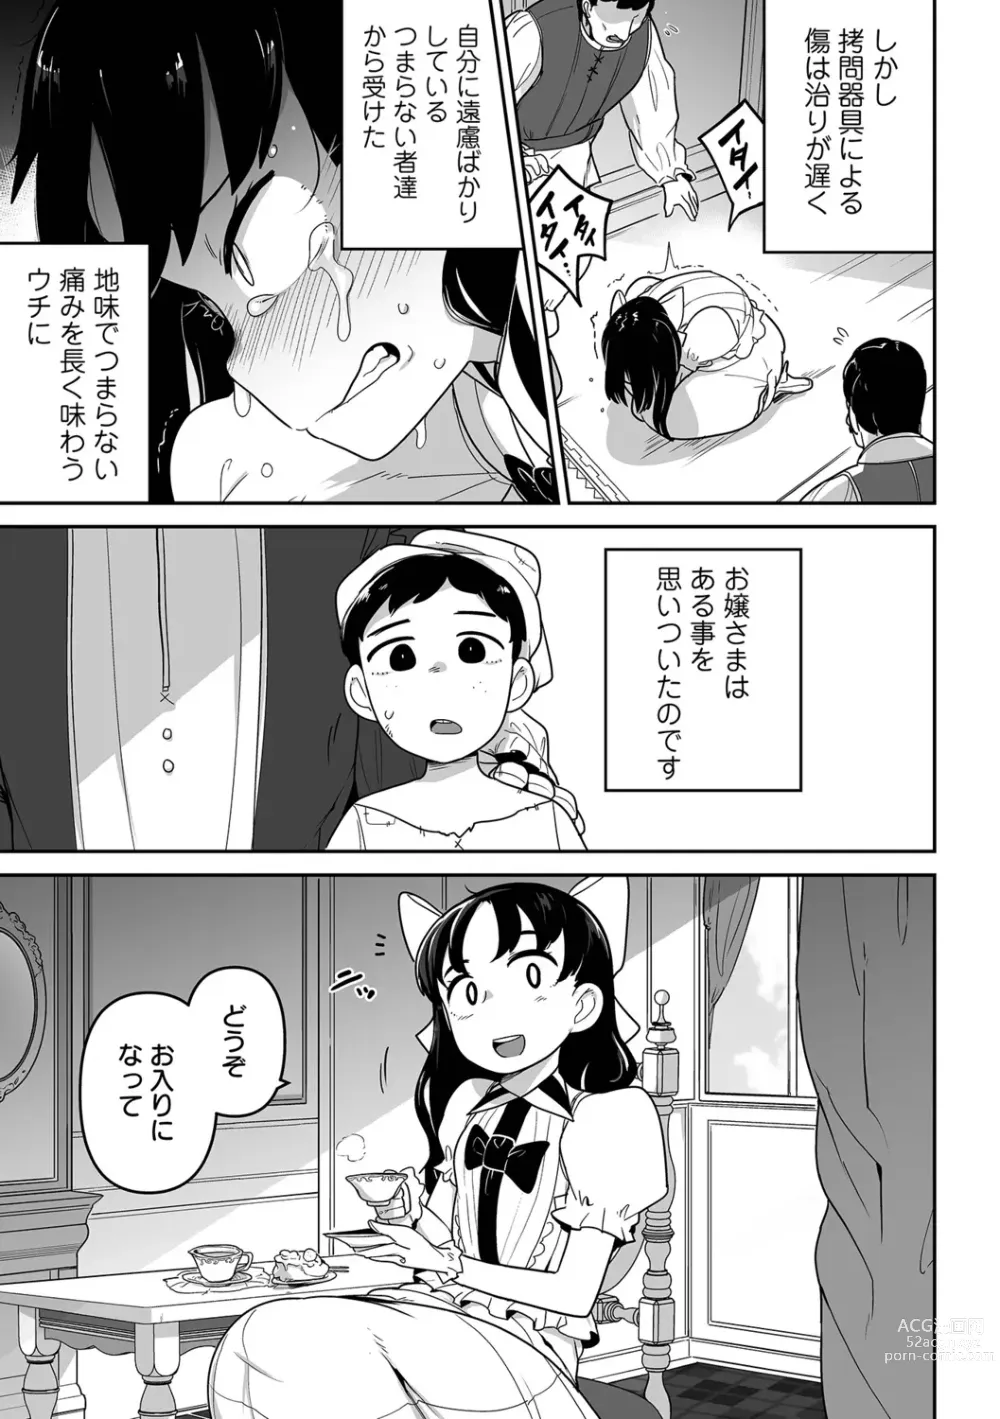 Page 27 of manga Ryona King Vol.18